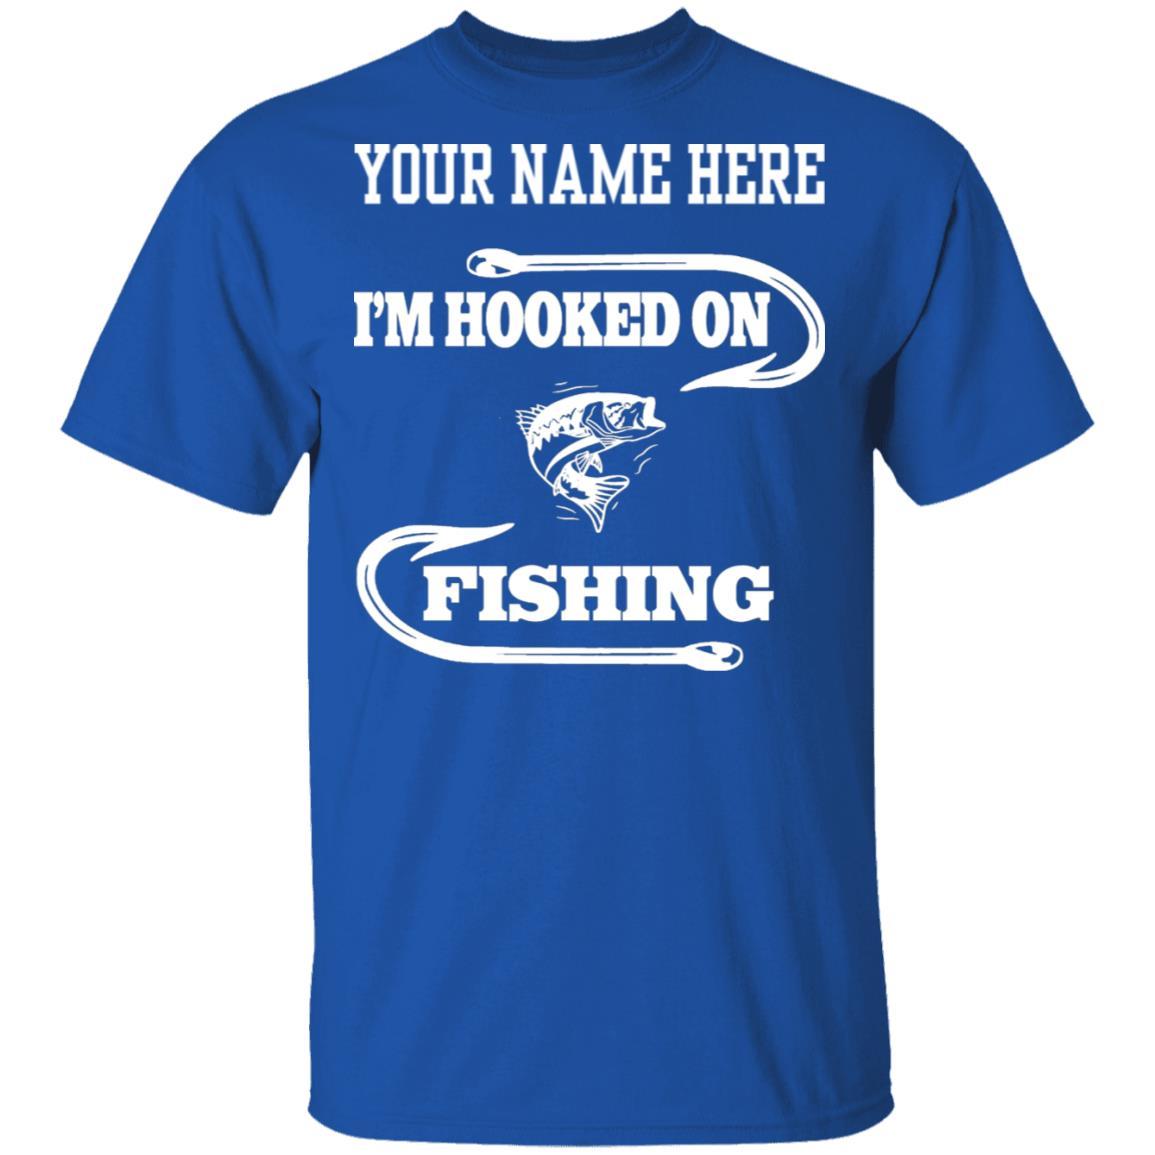 I'm hooked on fishing t-shirt w royal